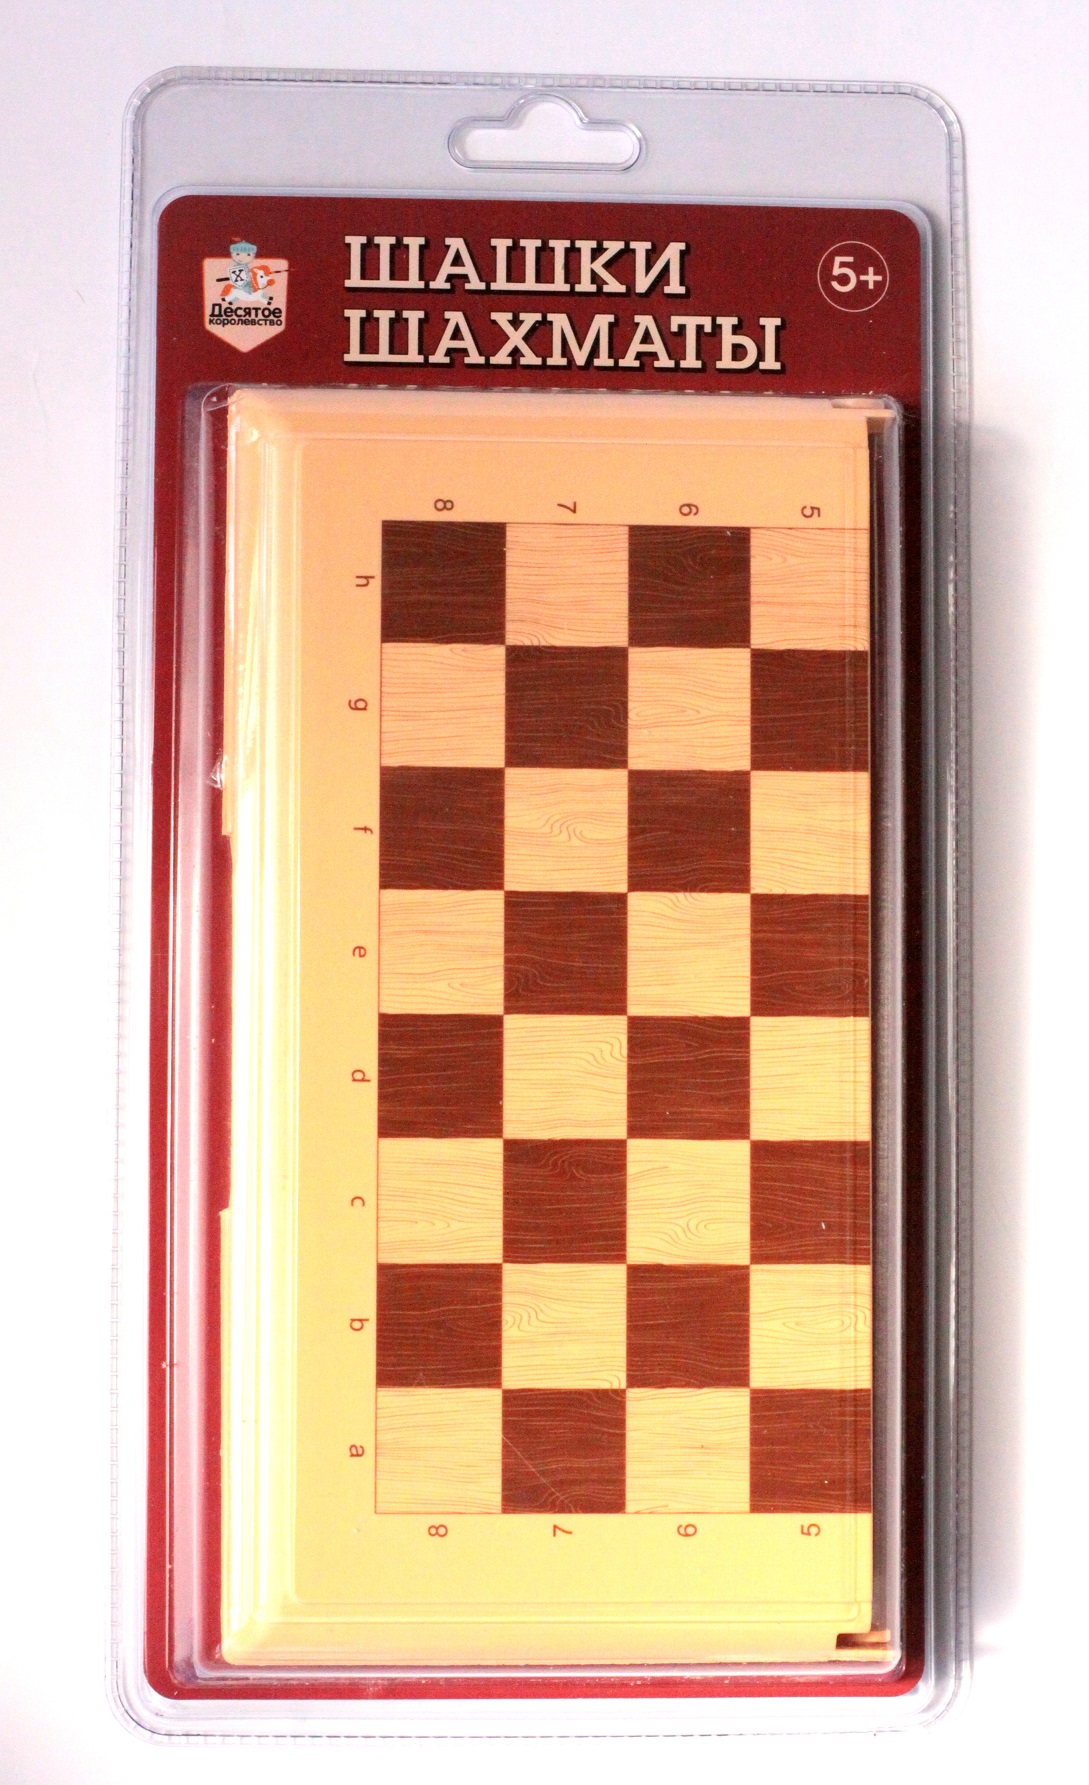 Игра настольная "Шашки-Шахматы" (мал, беж) блистер